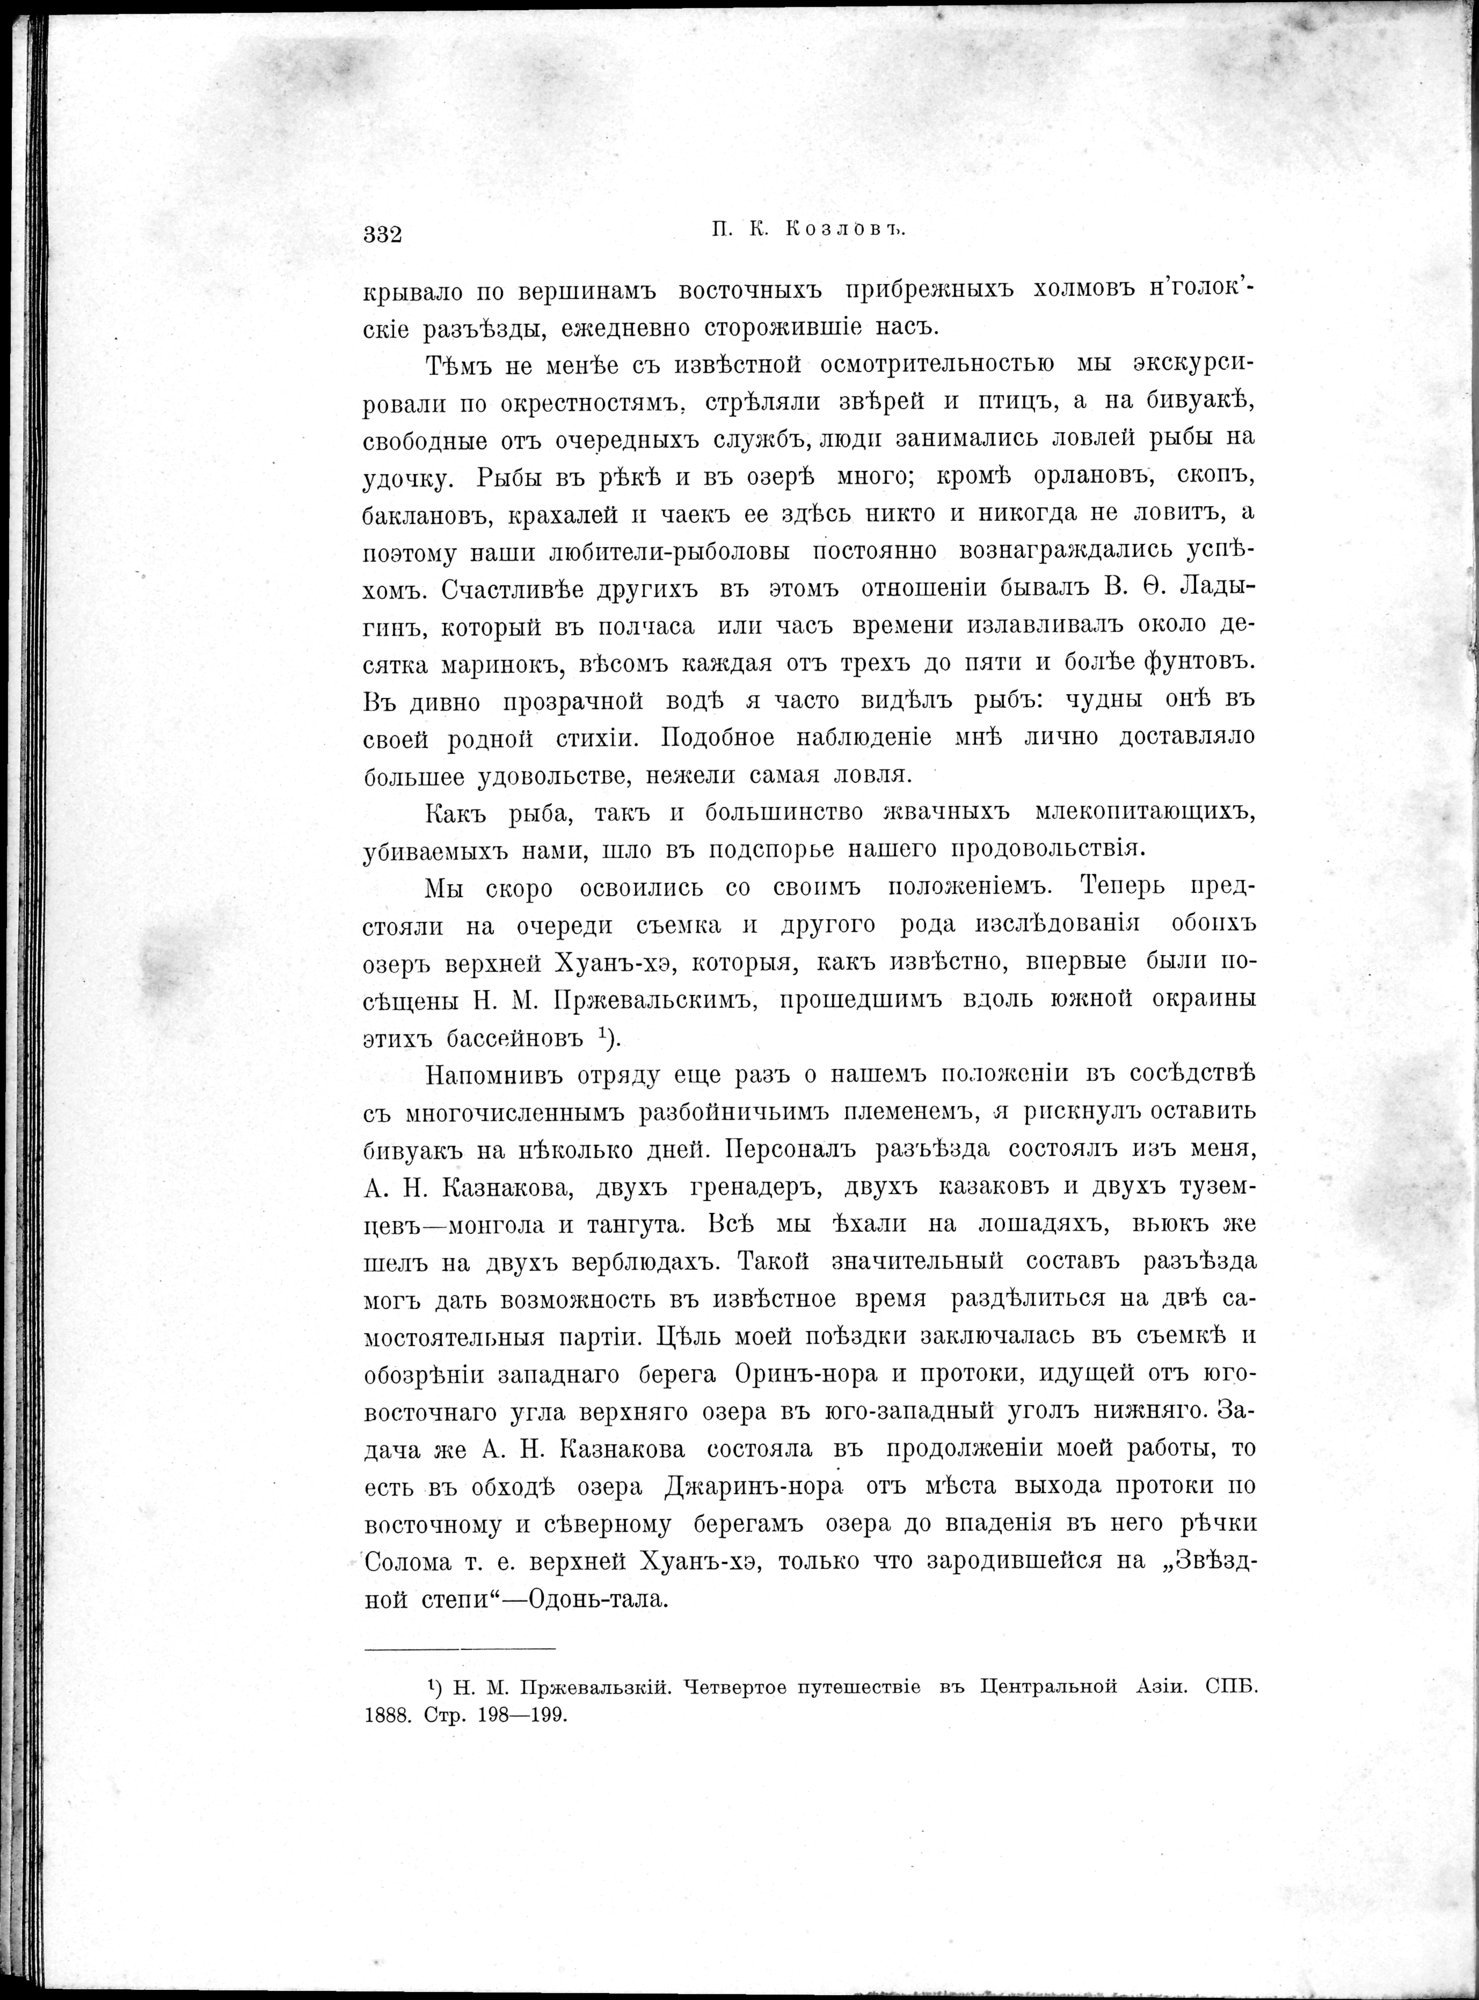 Mongoliia i Kam : vol.2 / Page 102 (Grayscale High Resolution Image)